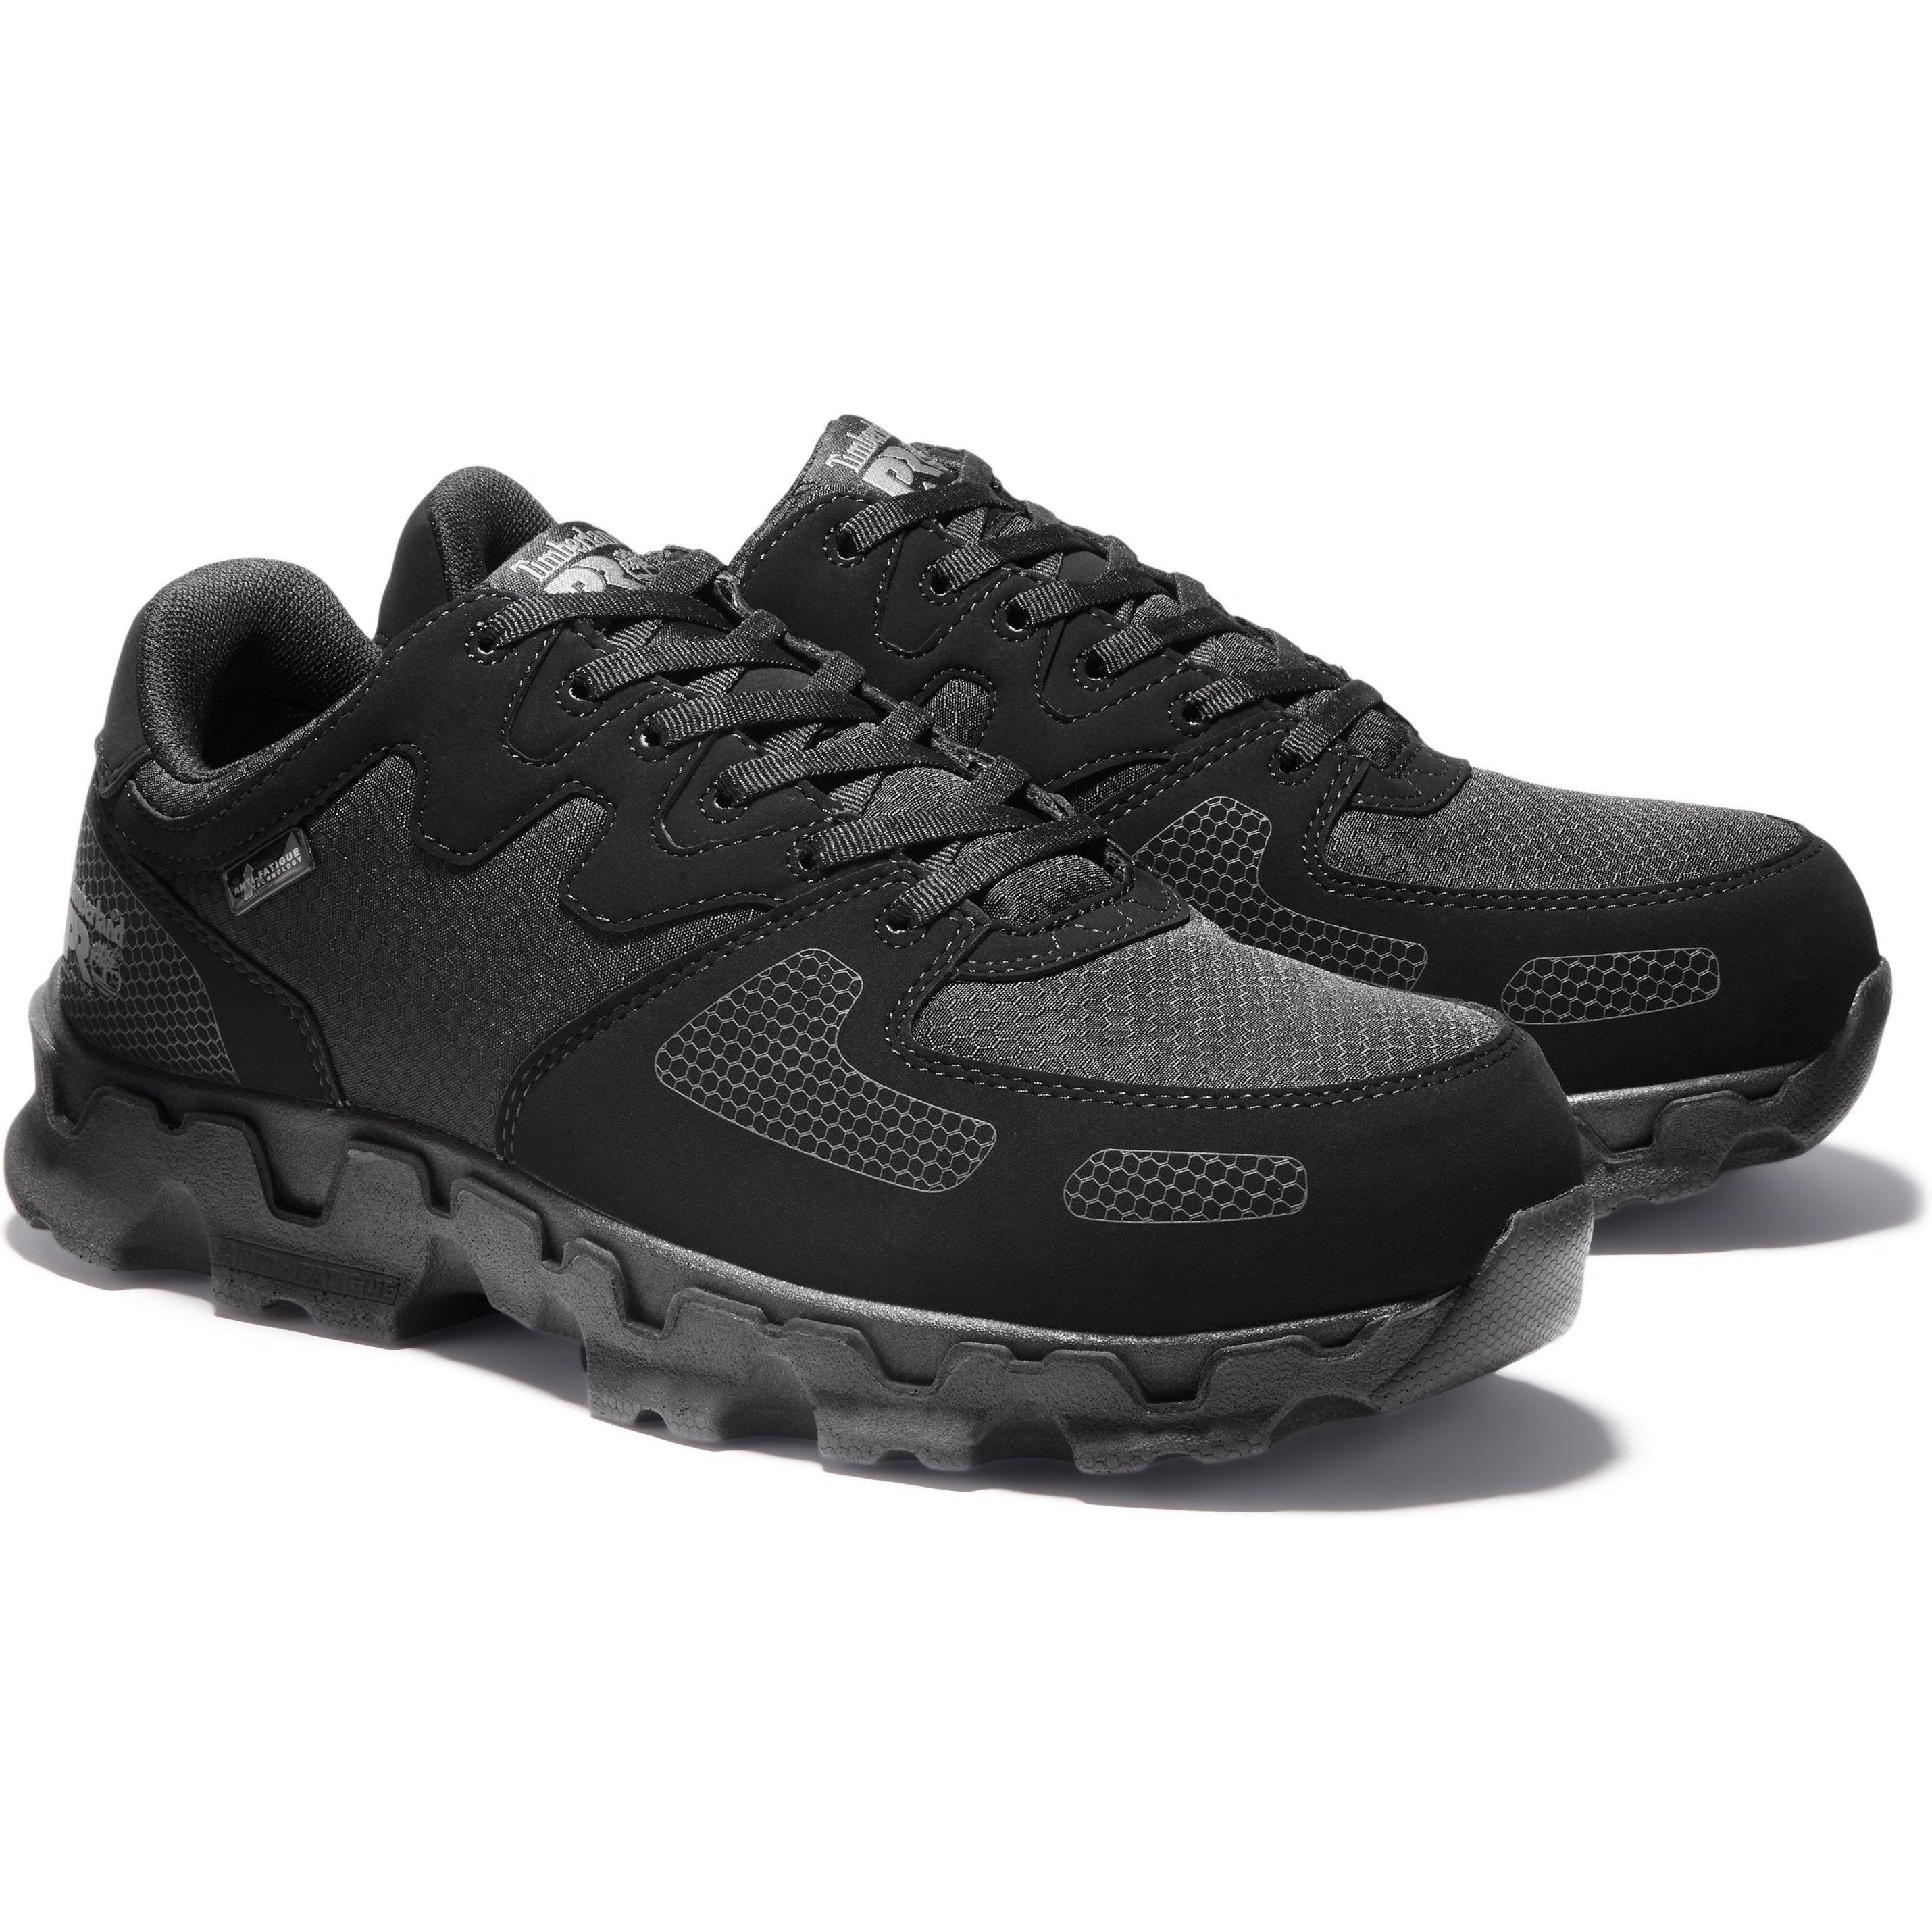 Timberland PRO Men's Powertrain Sport Alloy Toe Work Shoes TB0A176A001